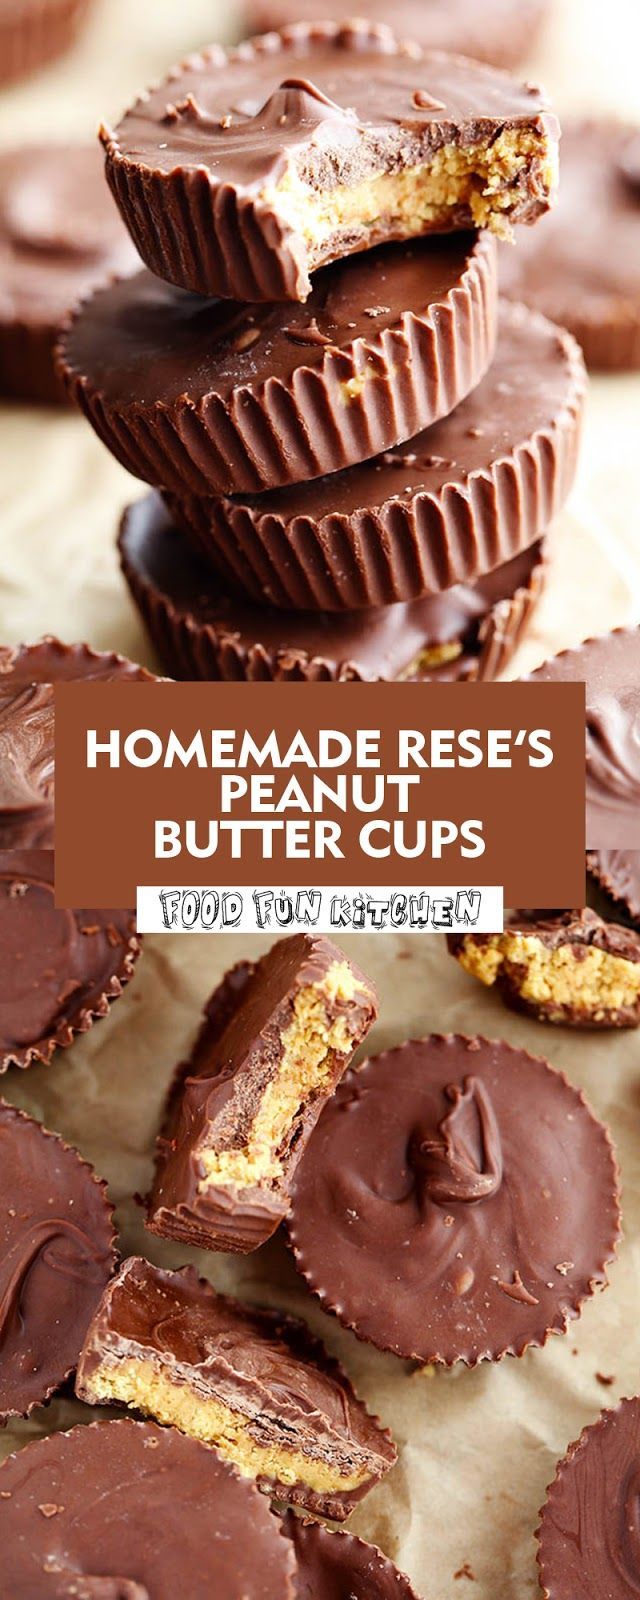 HOMEMADE REESE'S PEANUT BUTTER CUPS -   10 desserts Birthday peanut butter cups ideas